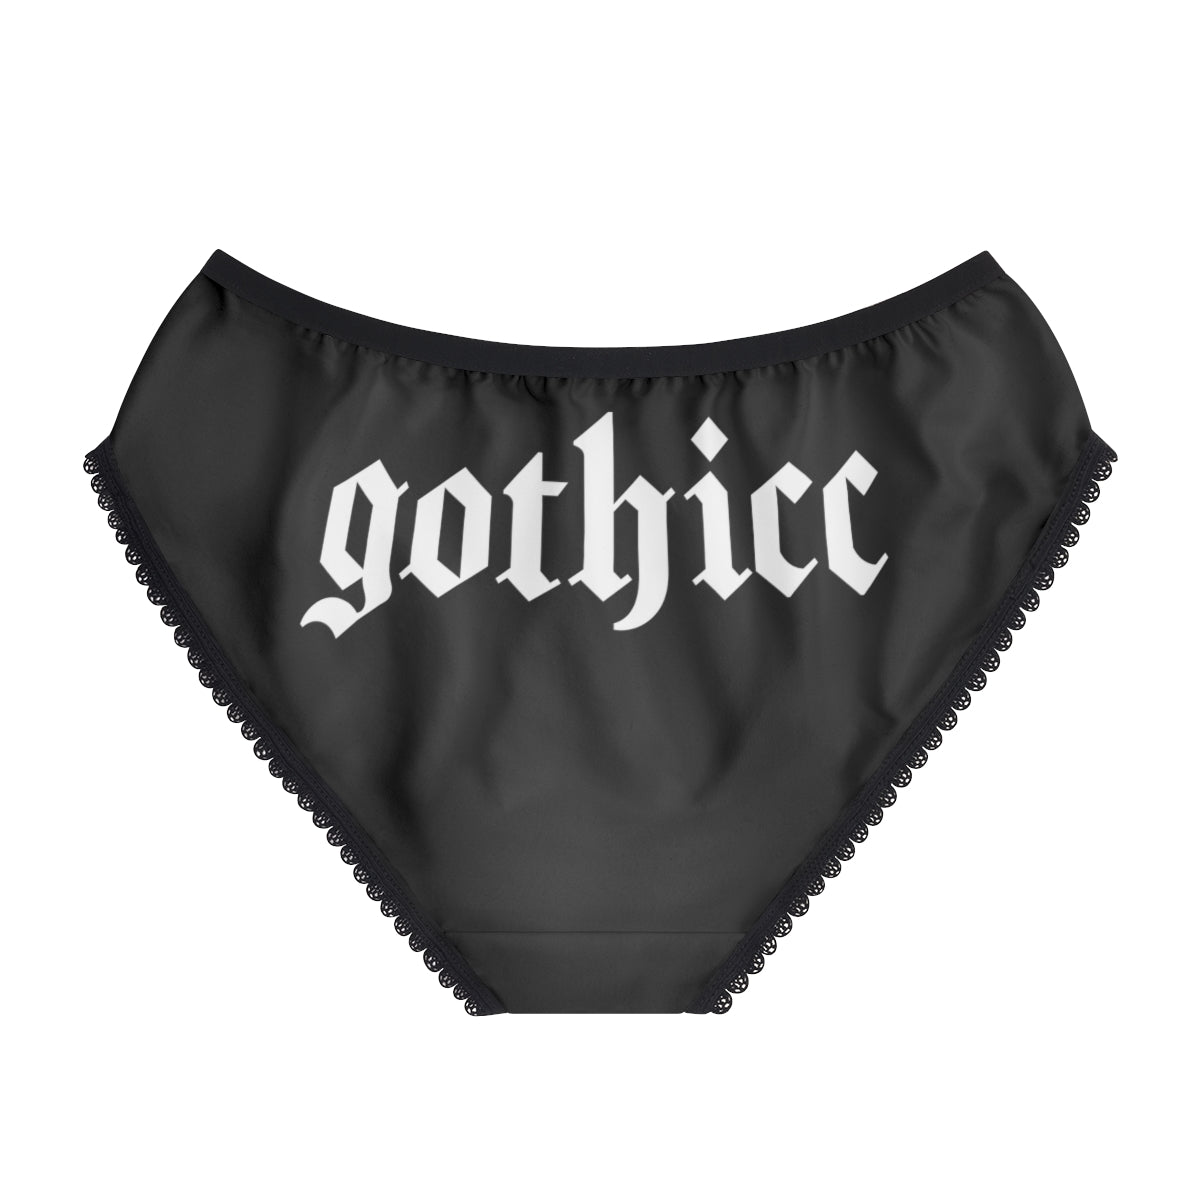 Dark Goth Gothicc Panties